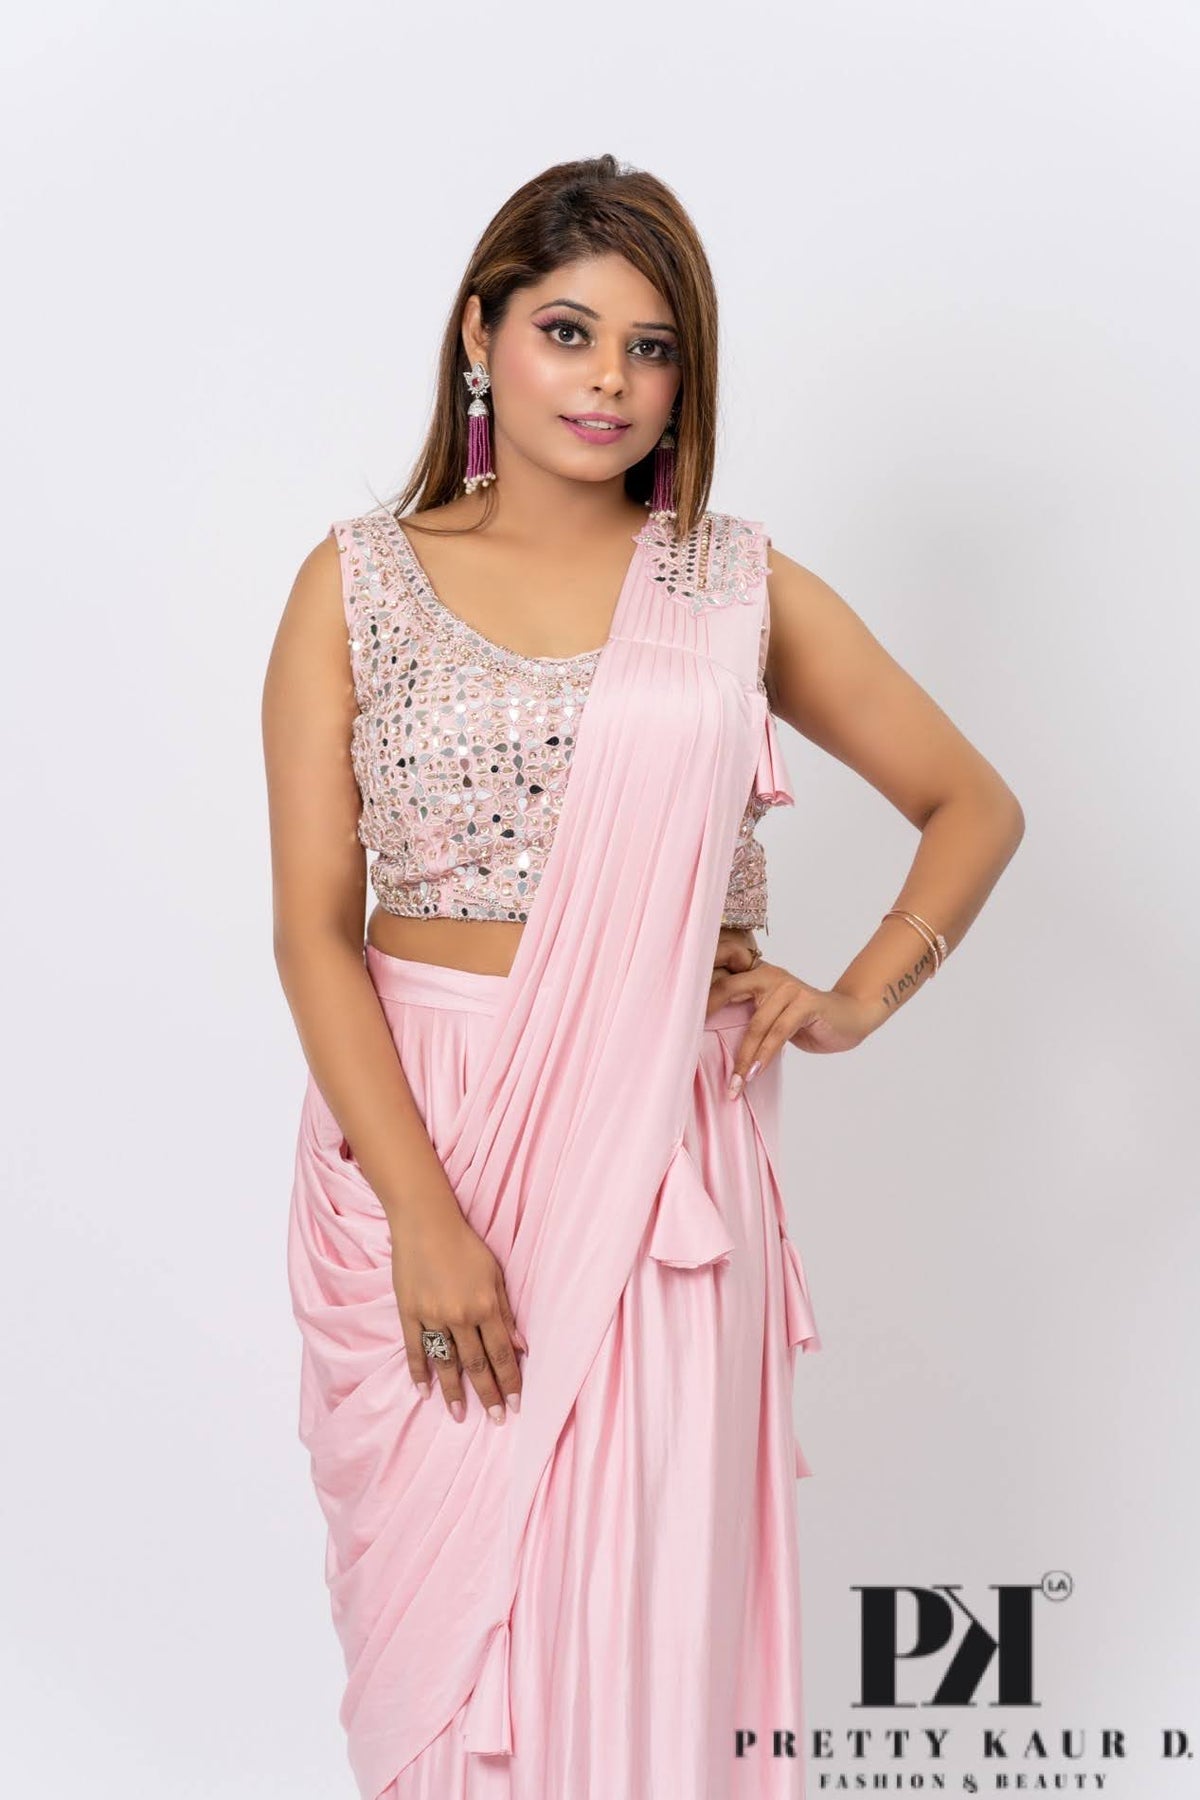 Pretty-Kaur-fashion-beauty-Ready-to-Wear-Designer-Pink-Saree-2